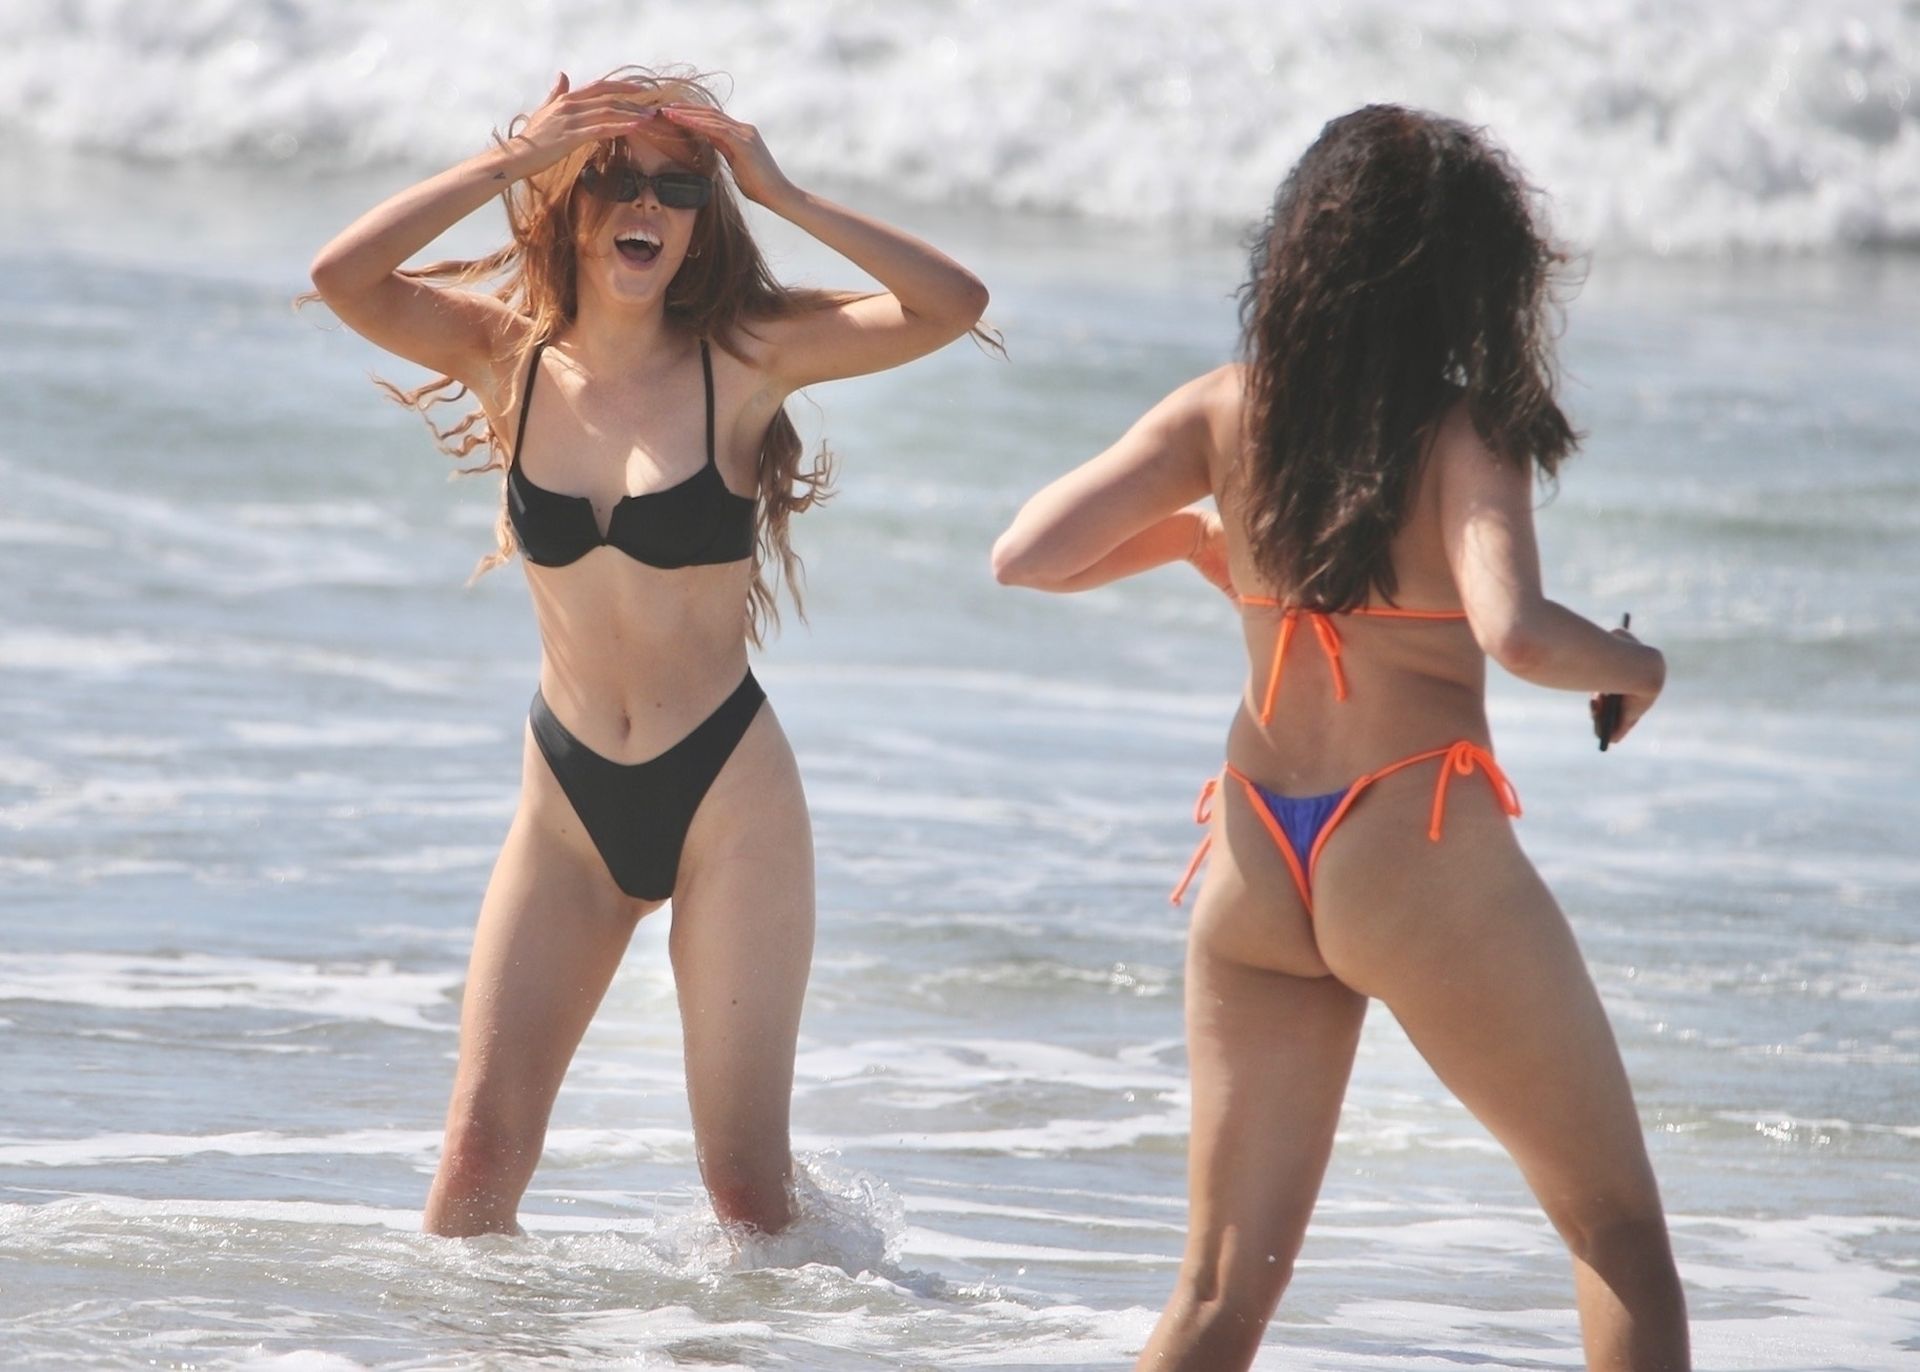 Zoe-Clare McDonald Shows Off Her Bikini Body (39 Photos)